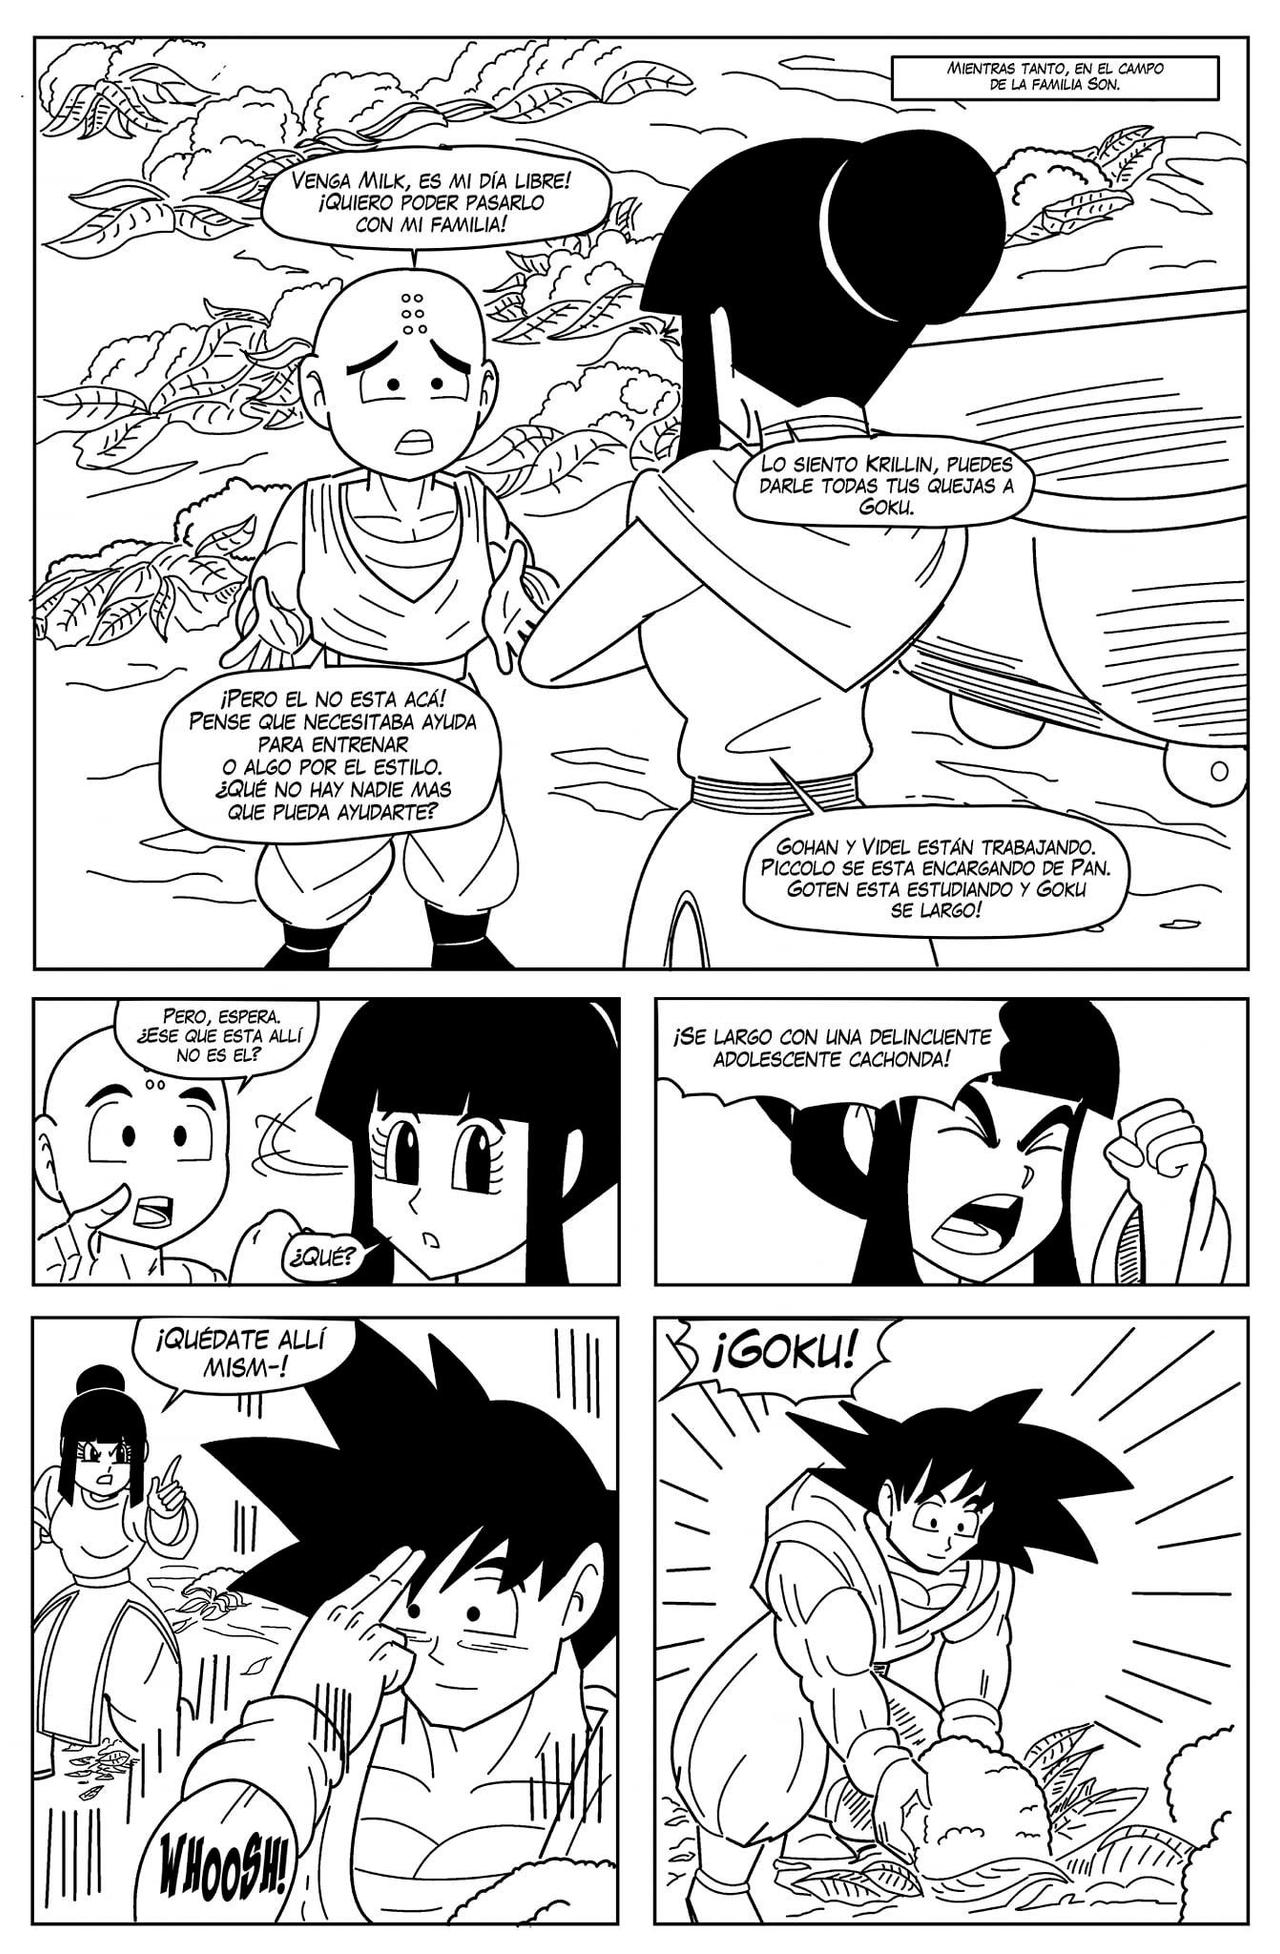 DragonBall:GTH(A Goku X Caulifla Story)ESPANOLP146 by chumpchangedraws on  DeviantArt